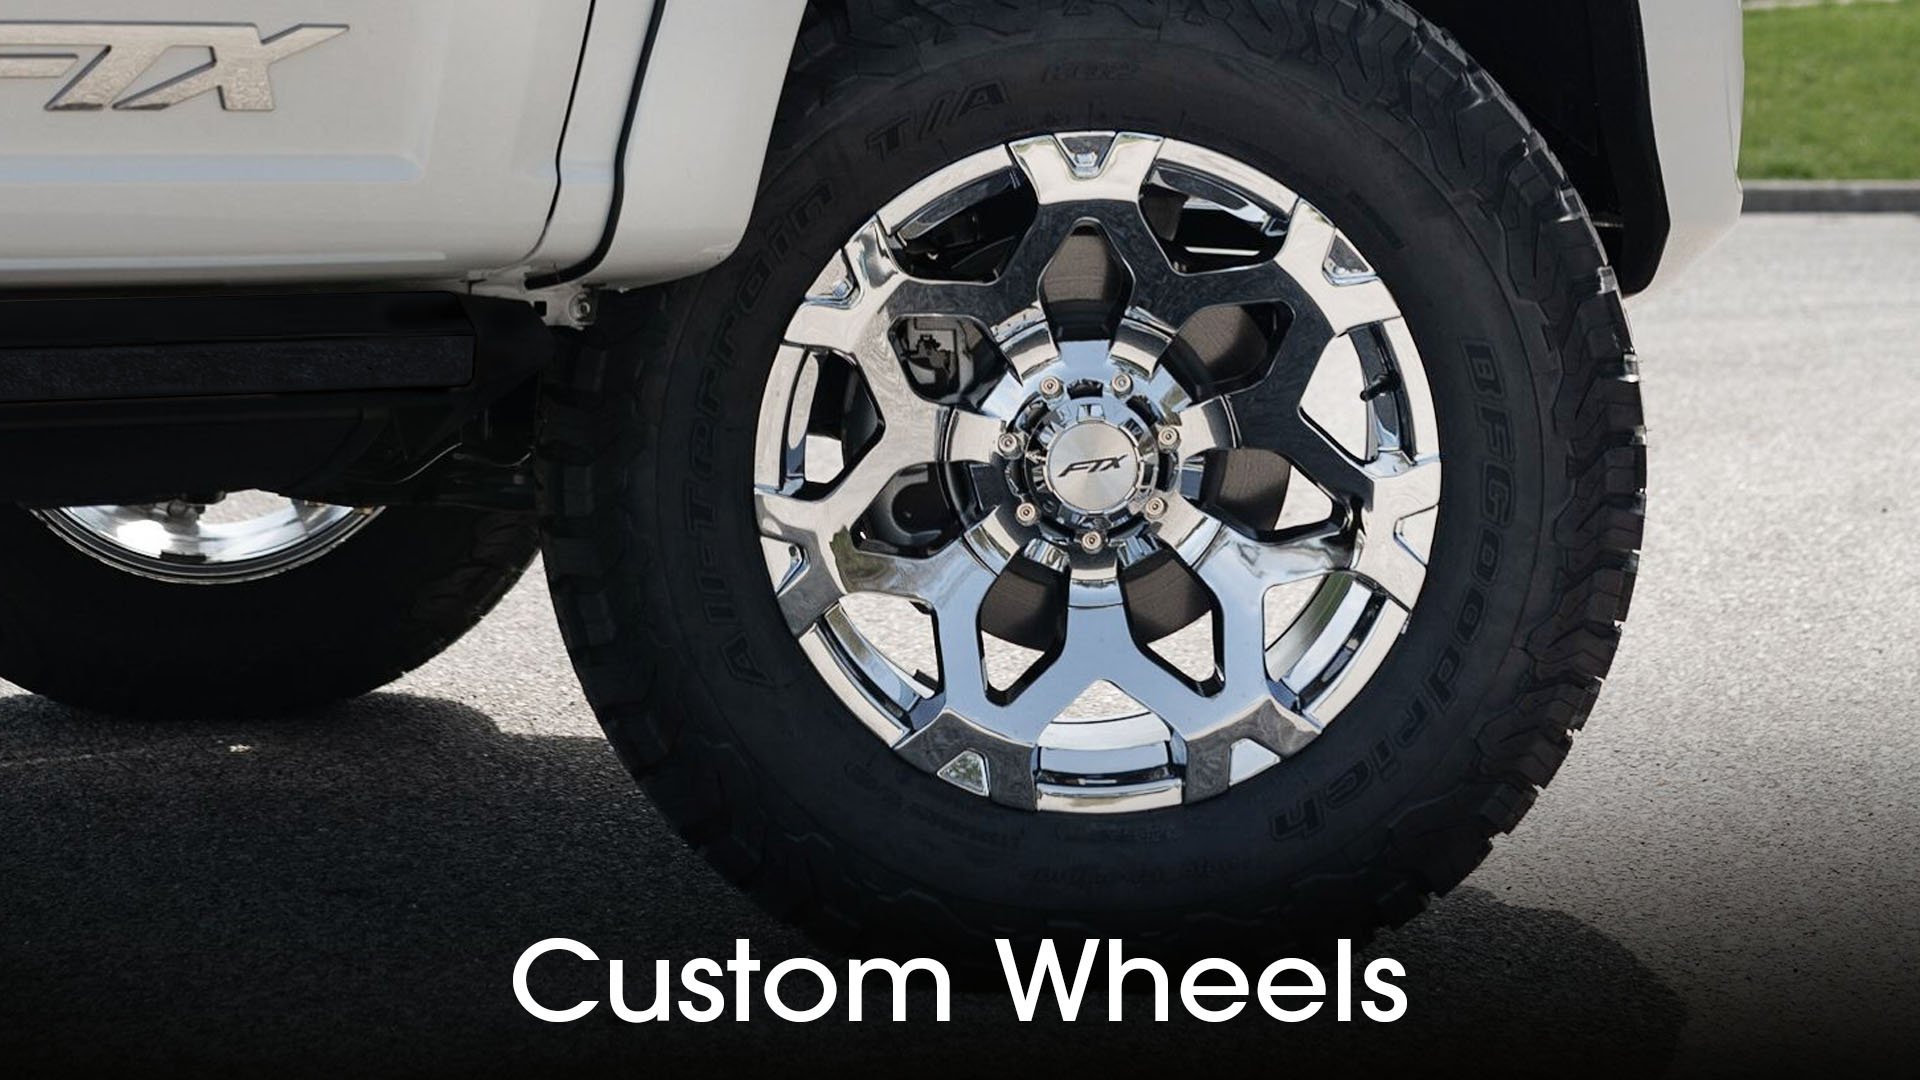 F150 FTX custom wheels